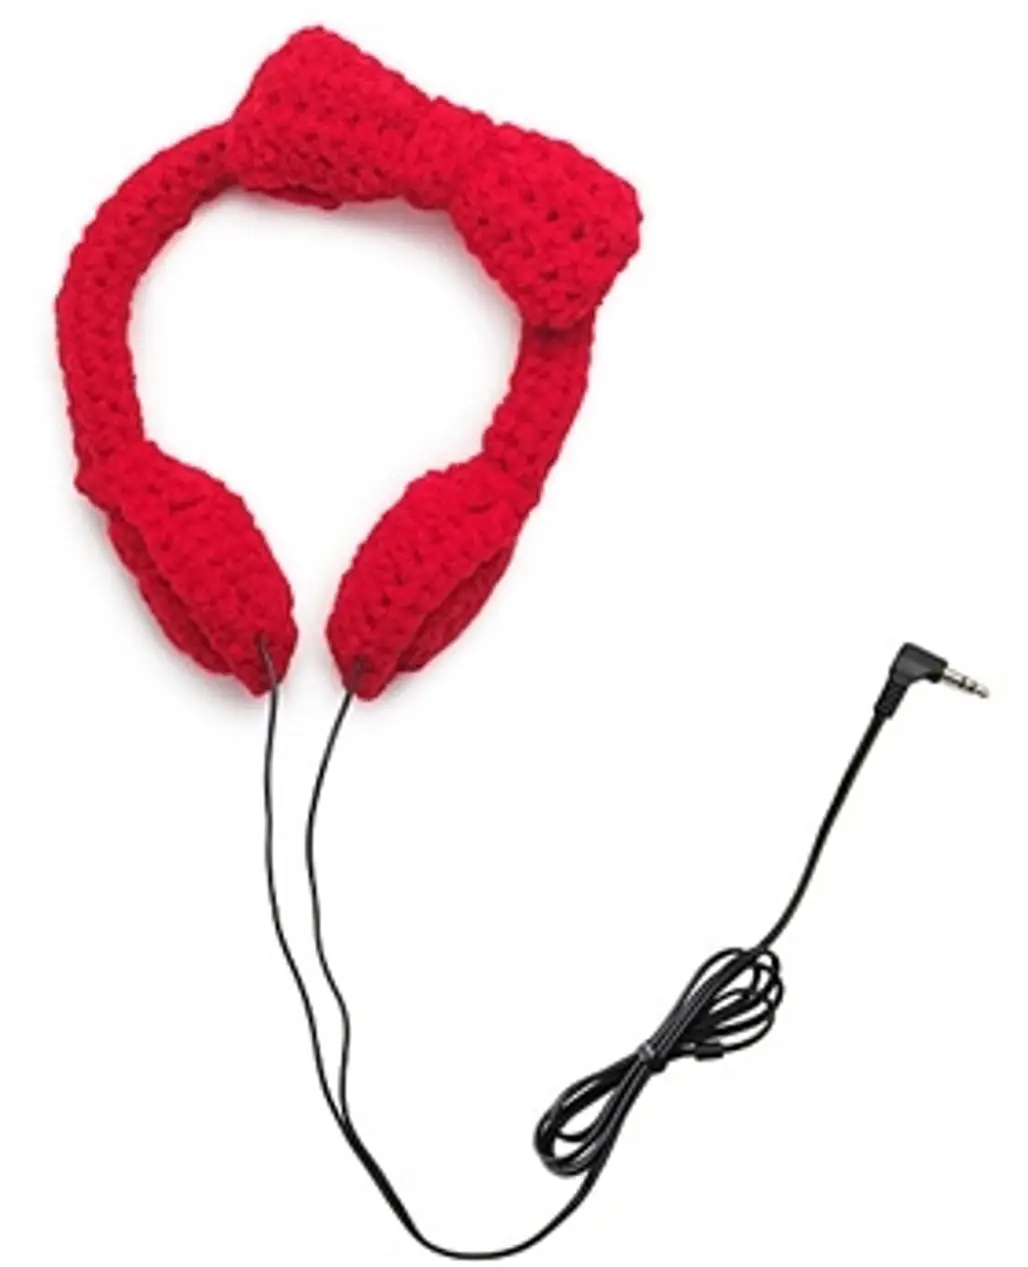 Crocheted Bow Headphones